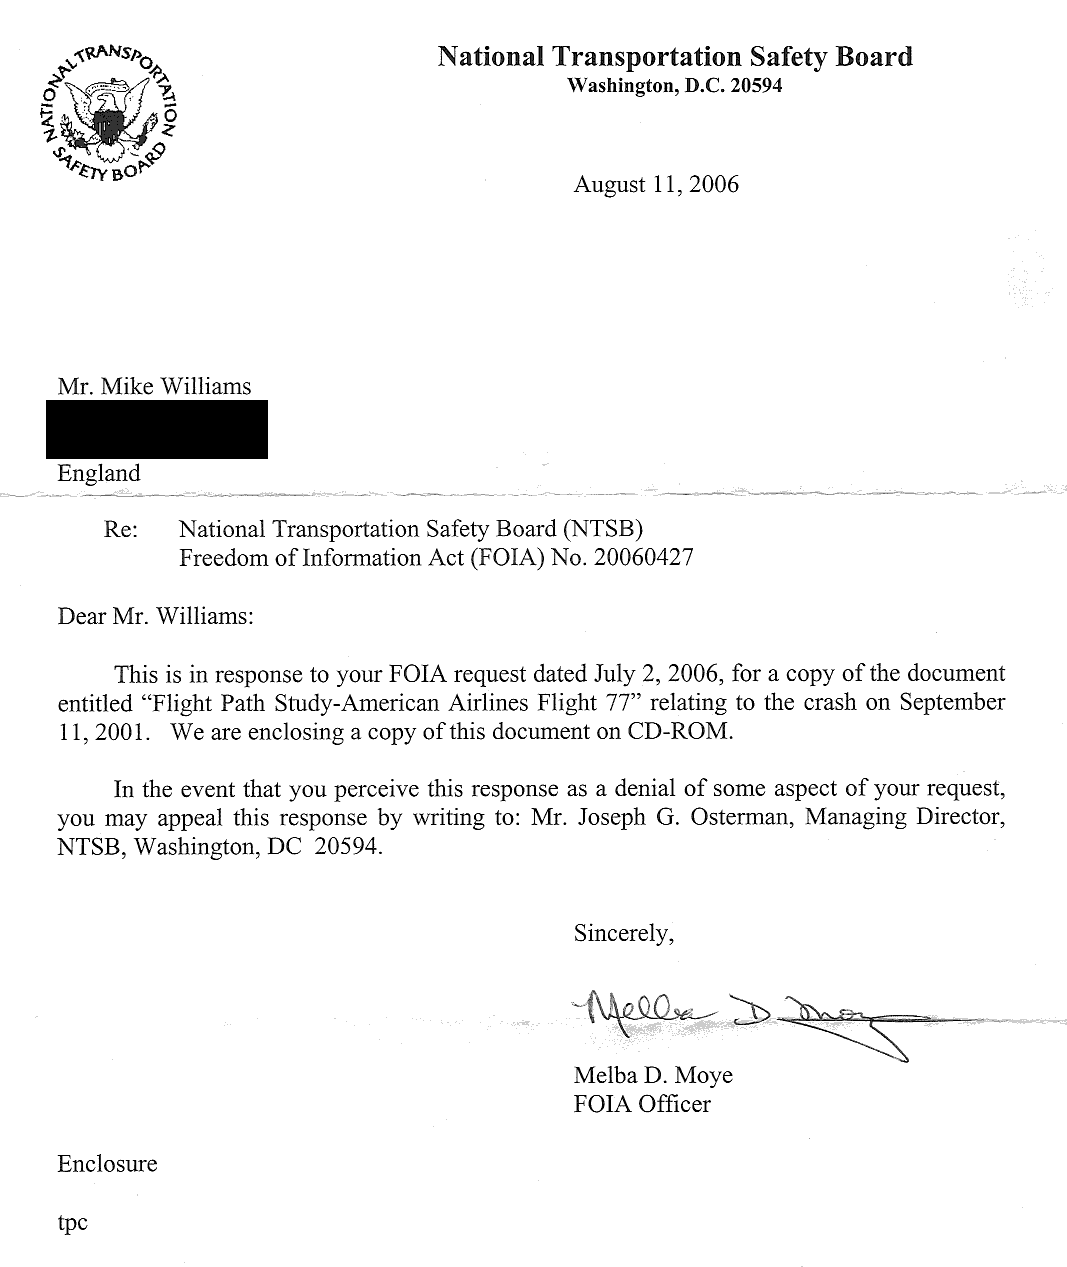 NTSB FOIA Response Cover Letter